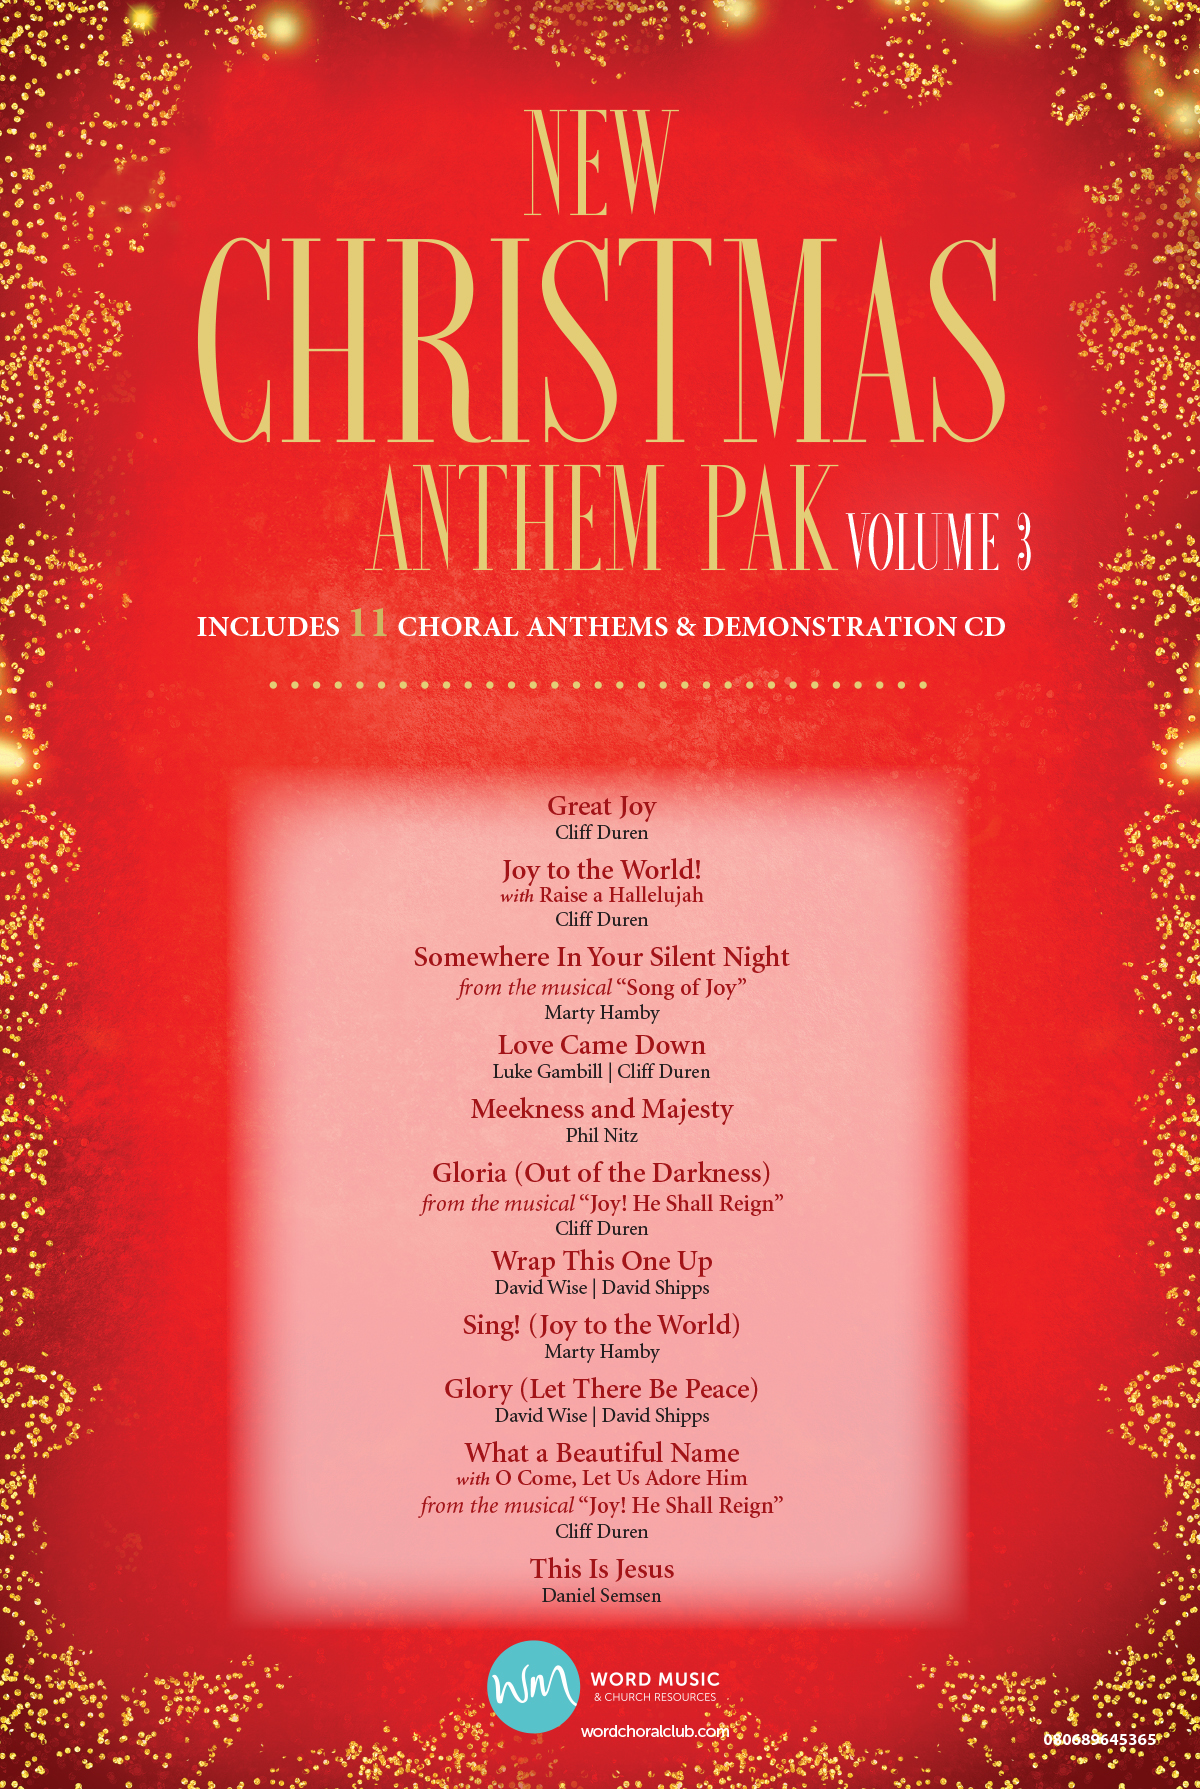 Anthem Preview Pak – New Christmas Volume 3